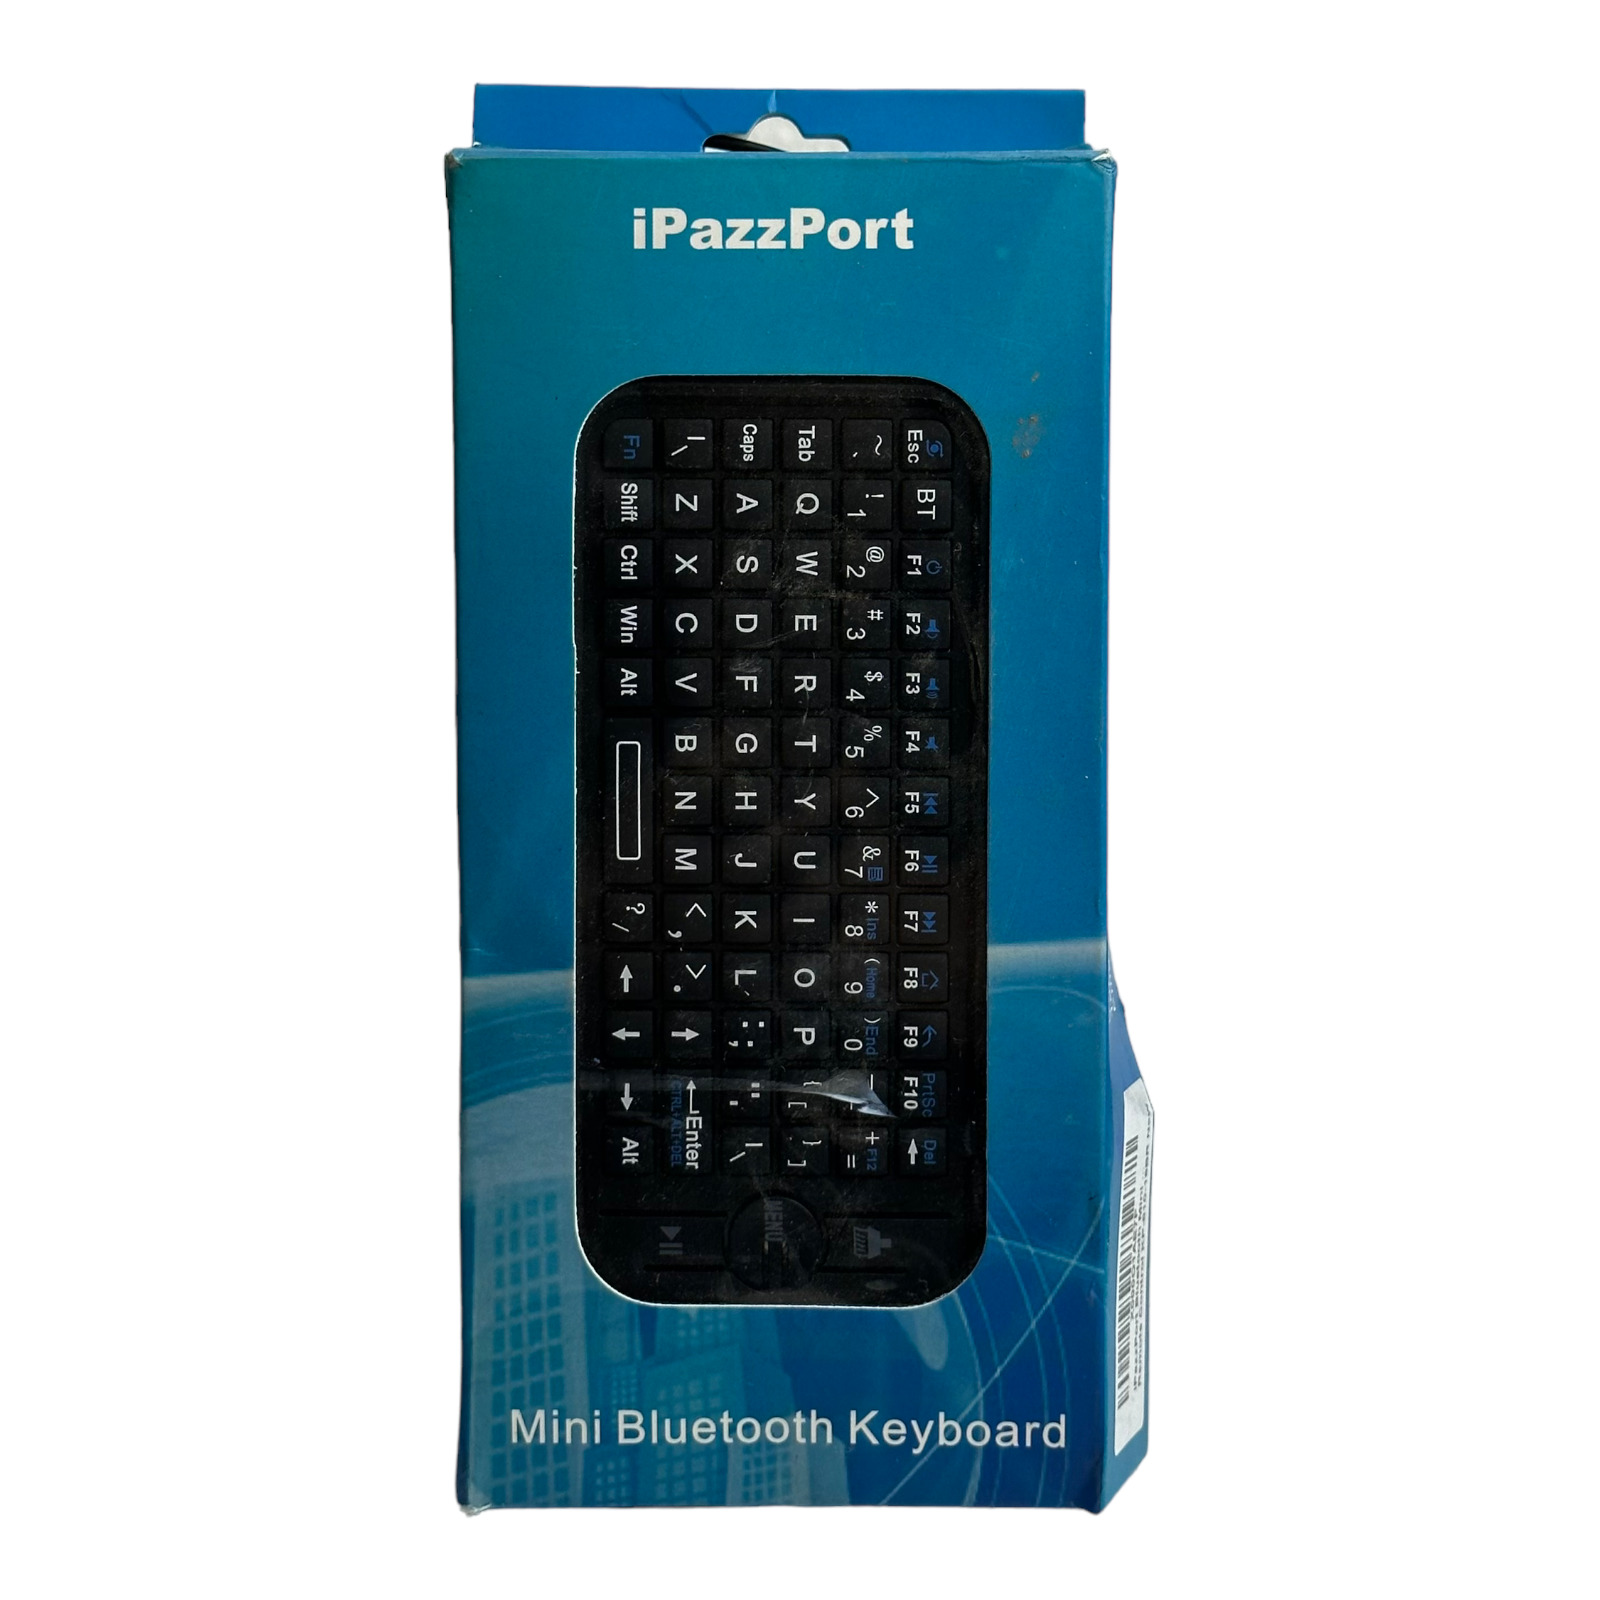 iPazzPort Wireless Mini Handheld Keyboard Touch Pad KP 810